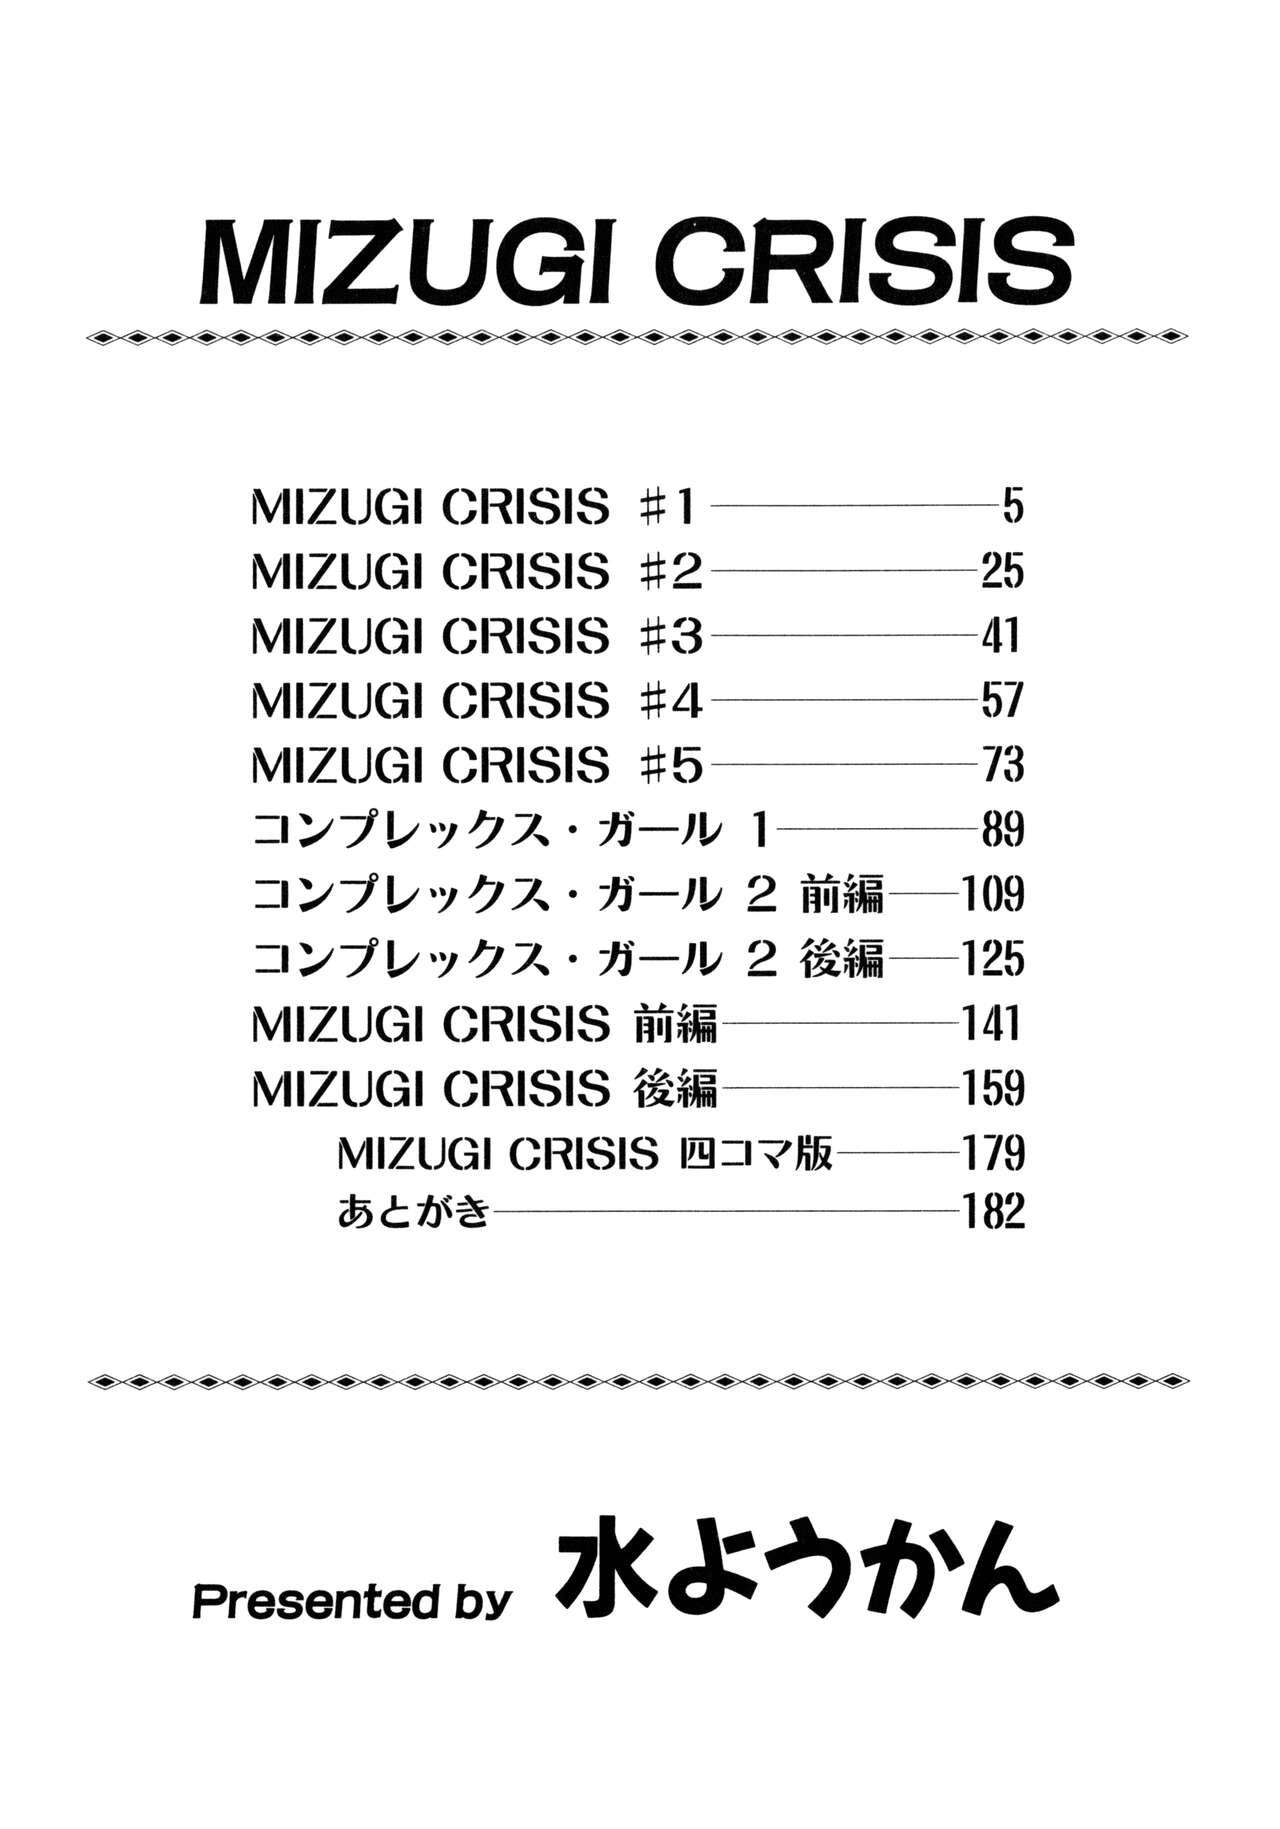 MIZUGI CRISIS 183